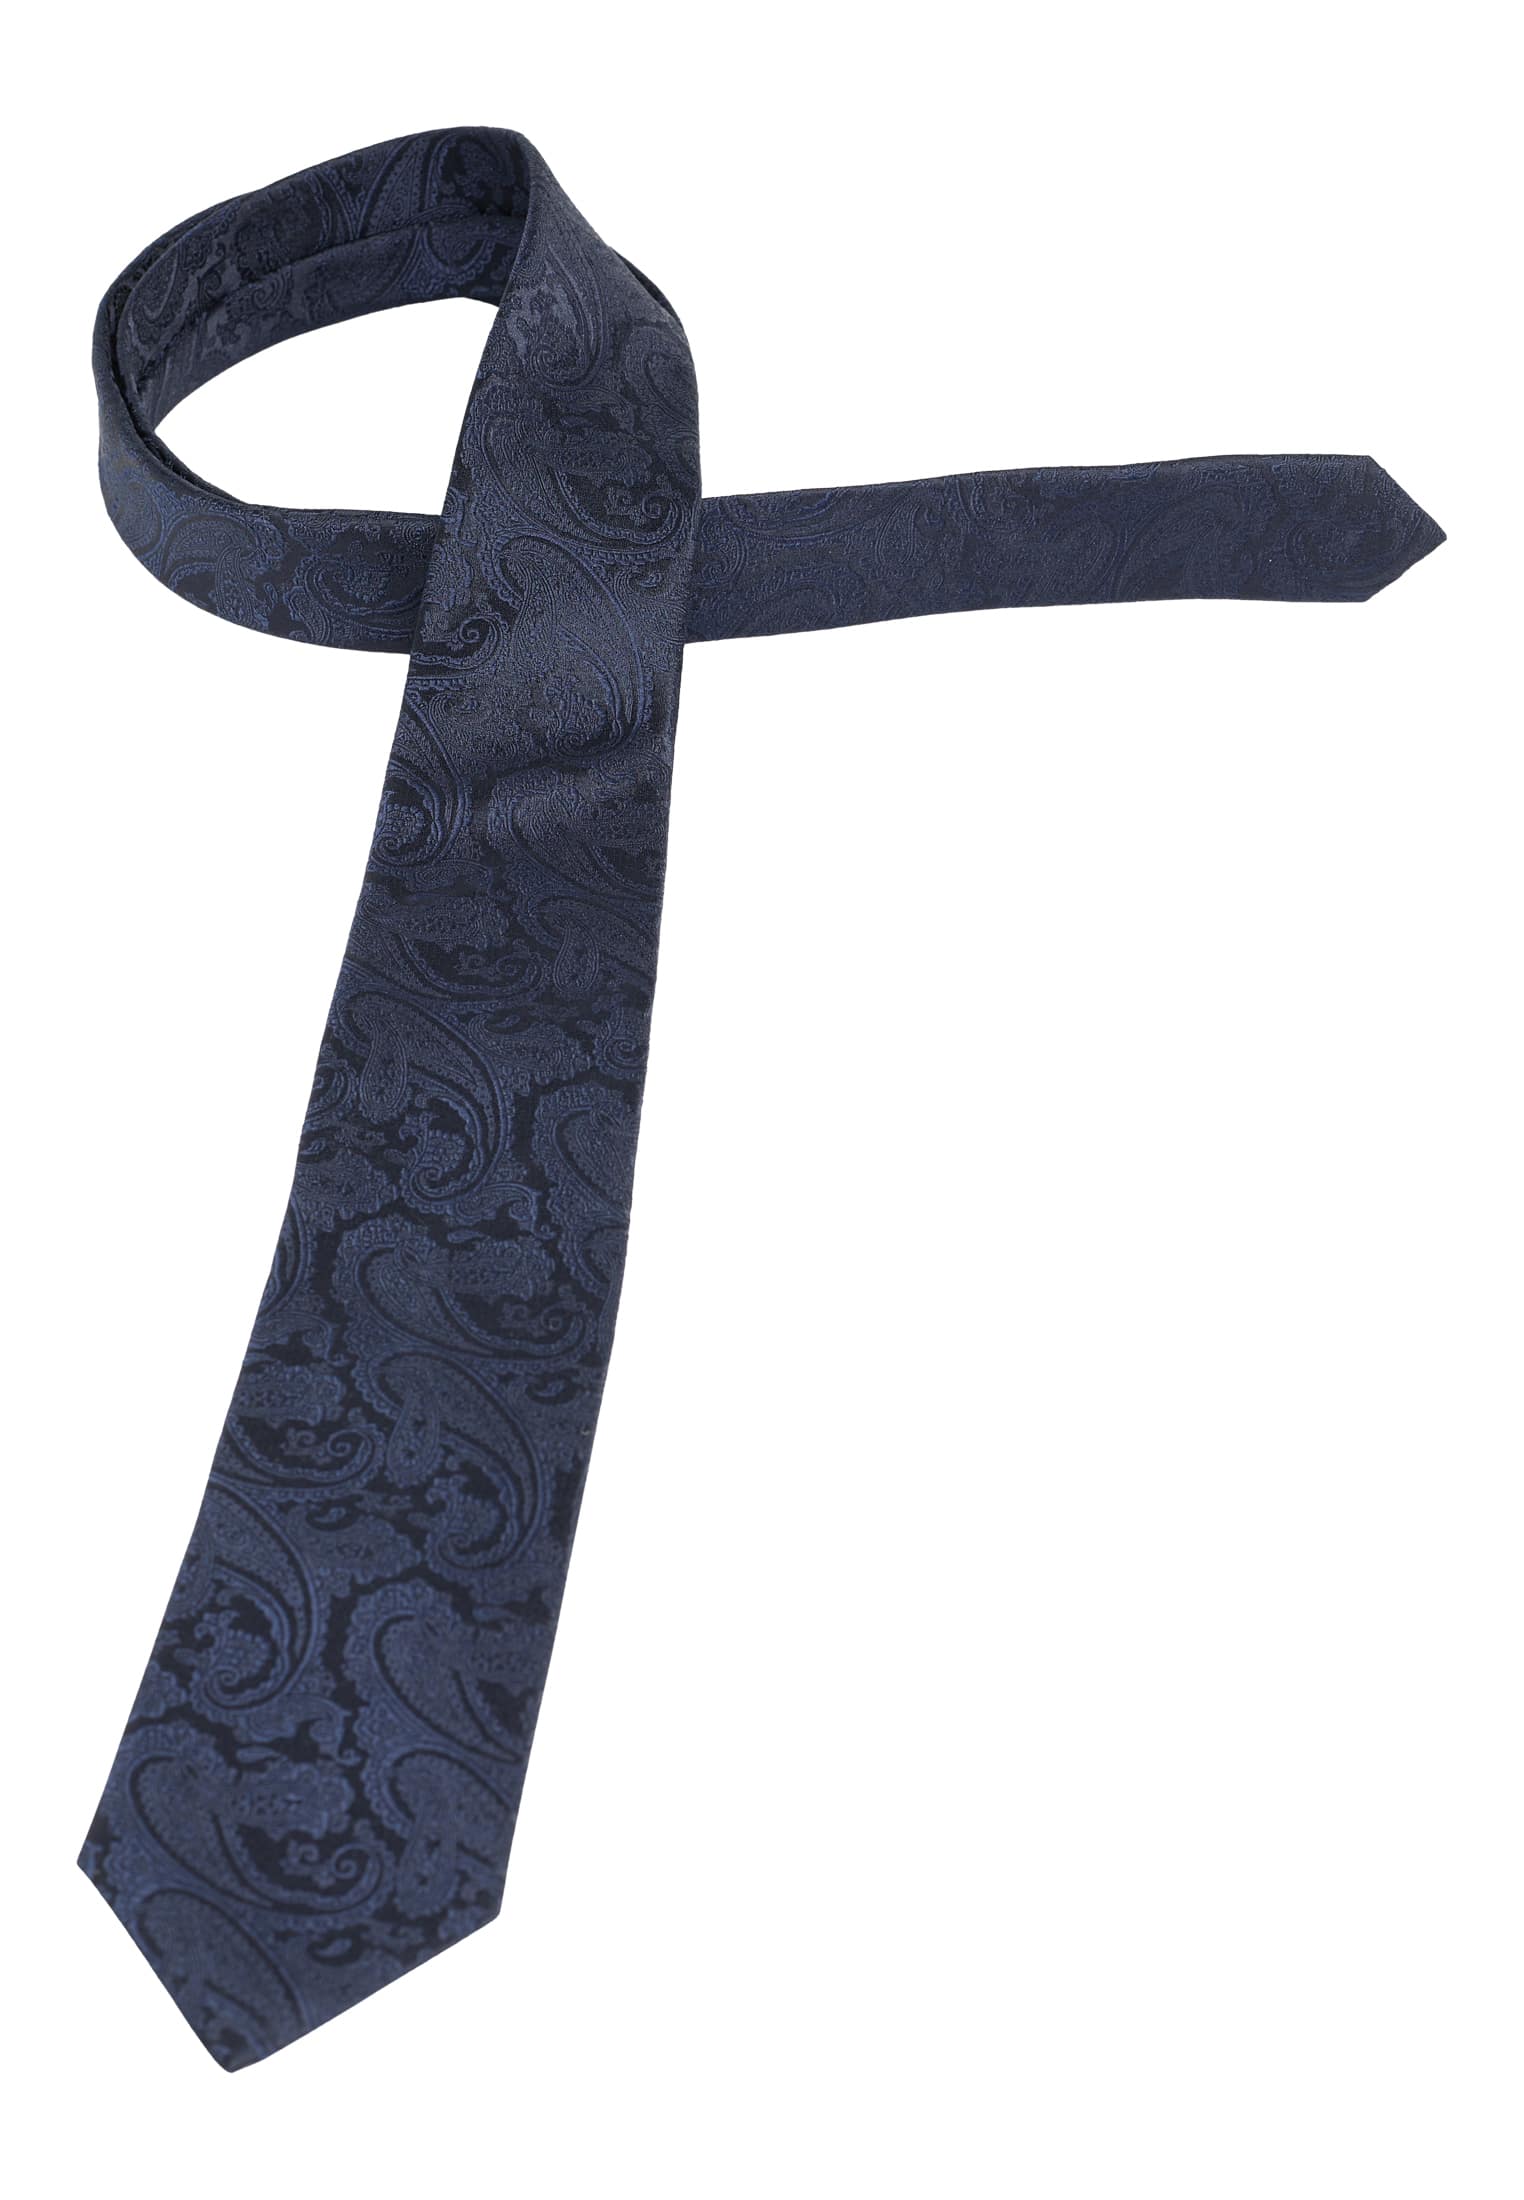 Krawatte in midnight gemustert 1AC01984-01-93-142 | | 142 midnight 